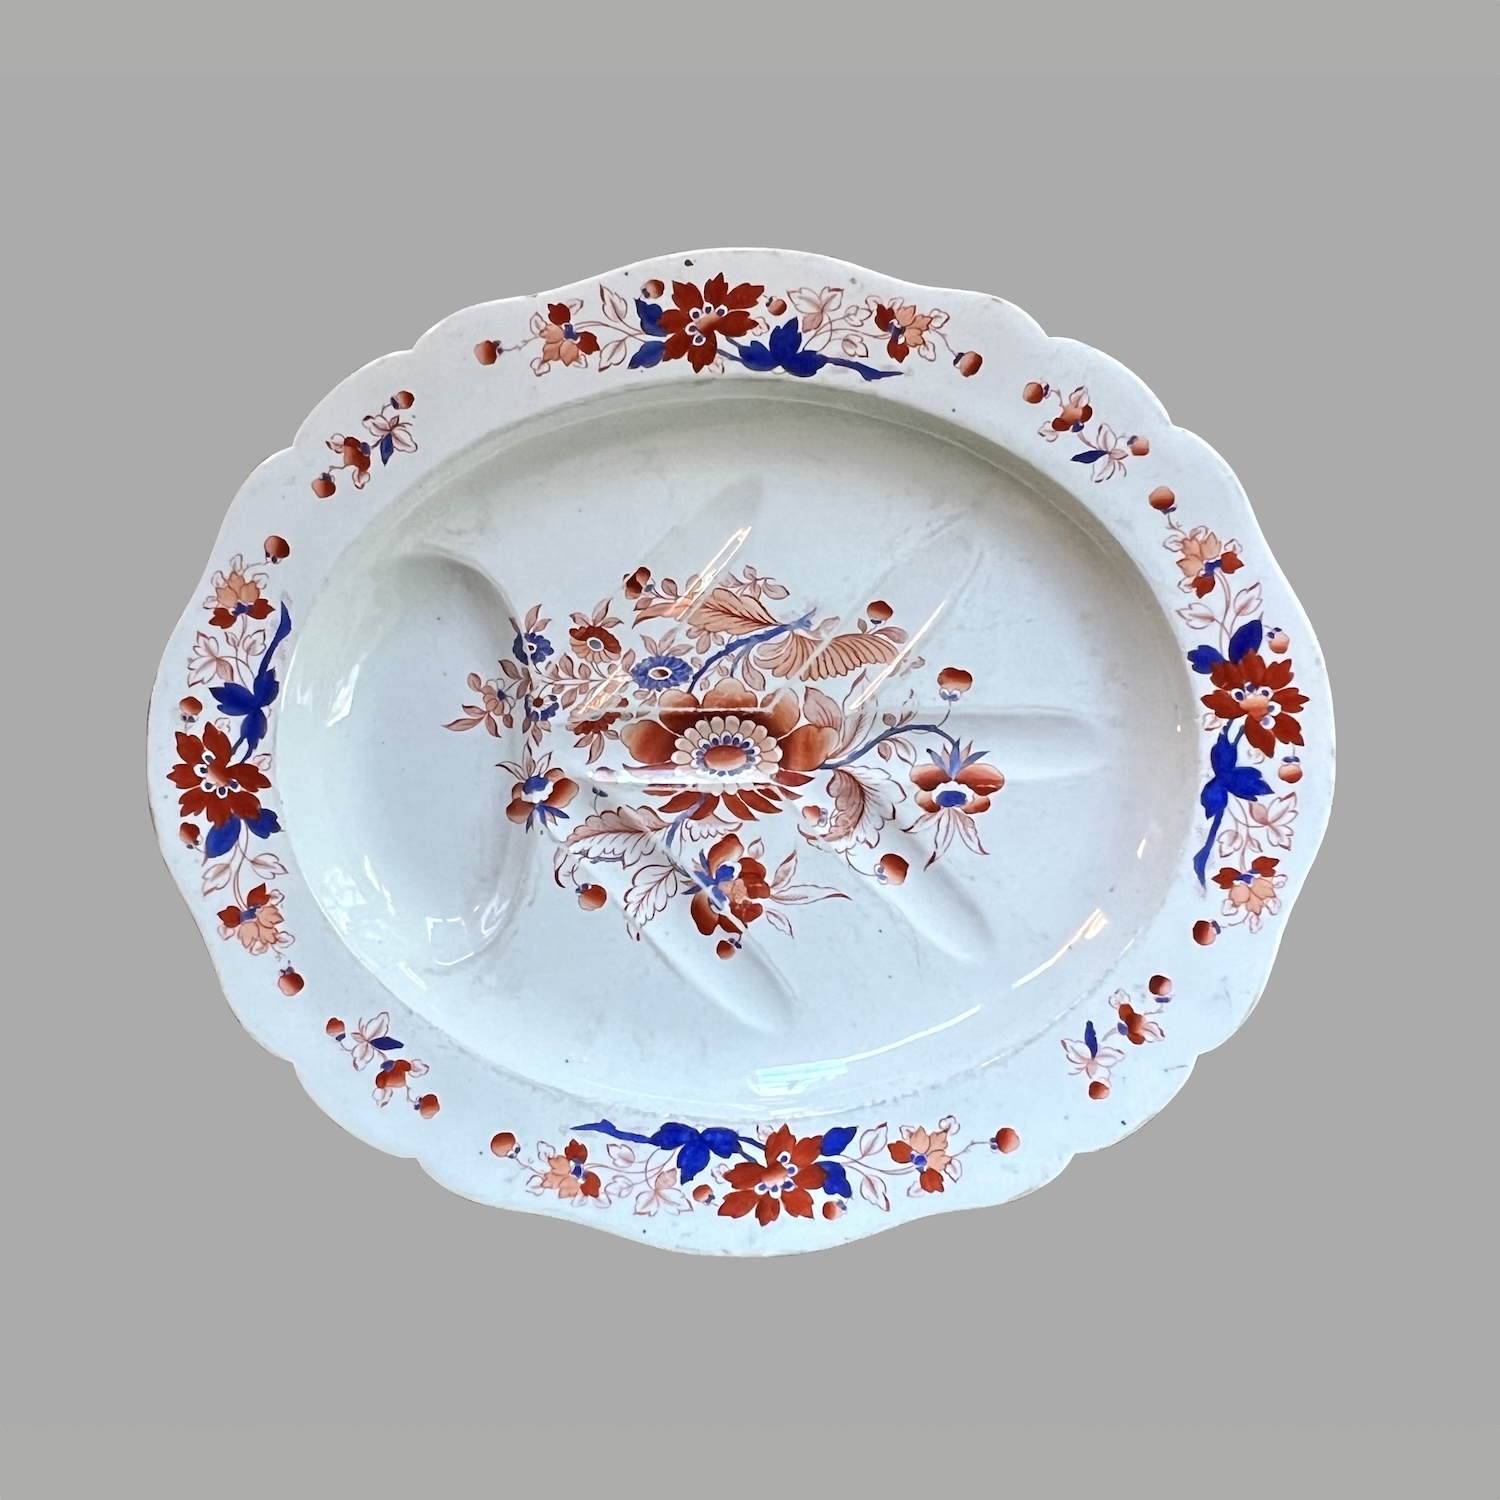 nineteenth-century-chamberlains-platter-a46-17